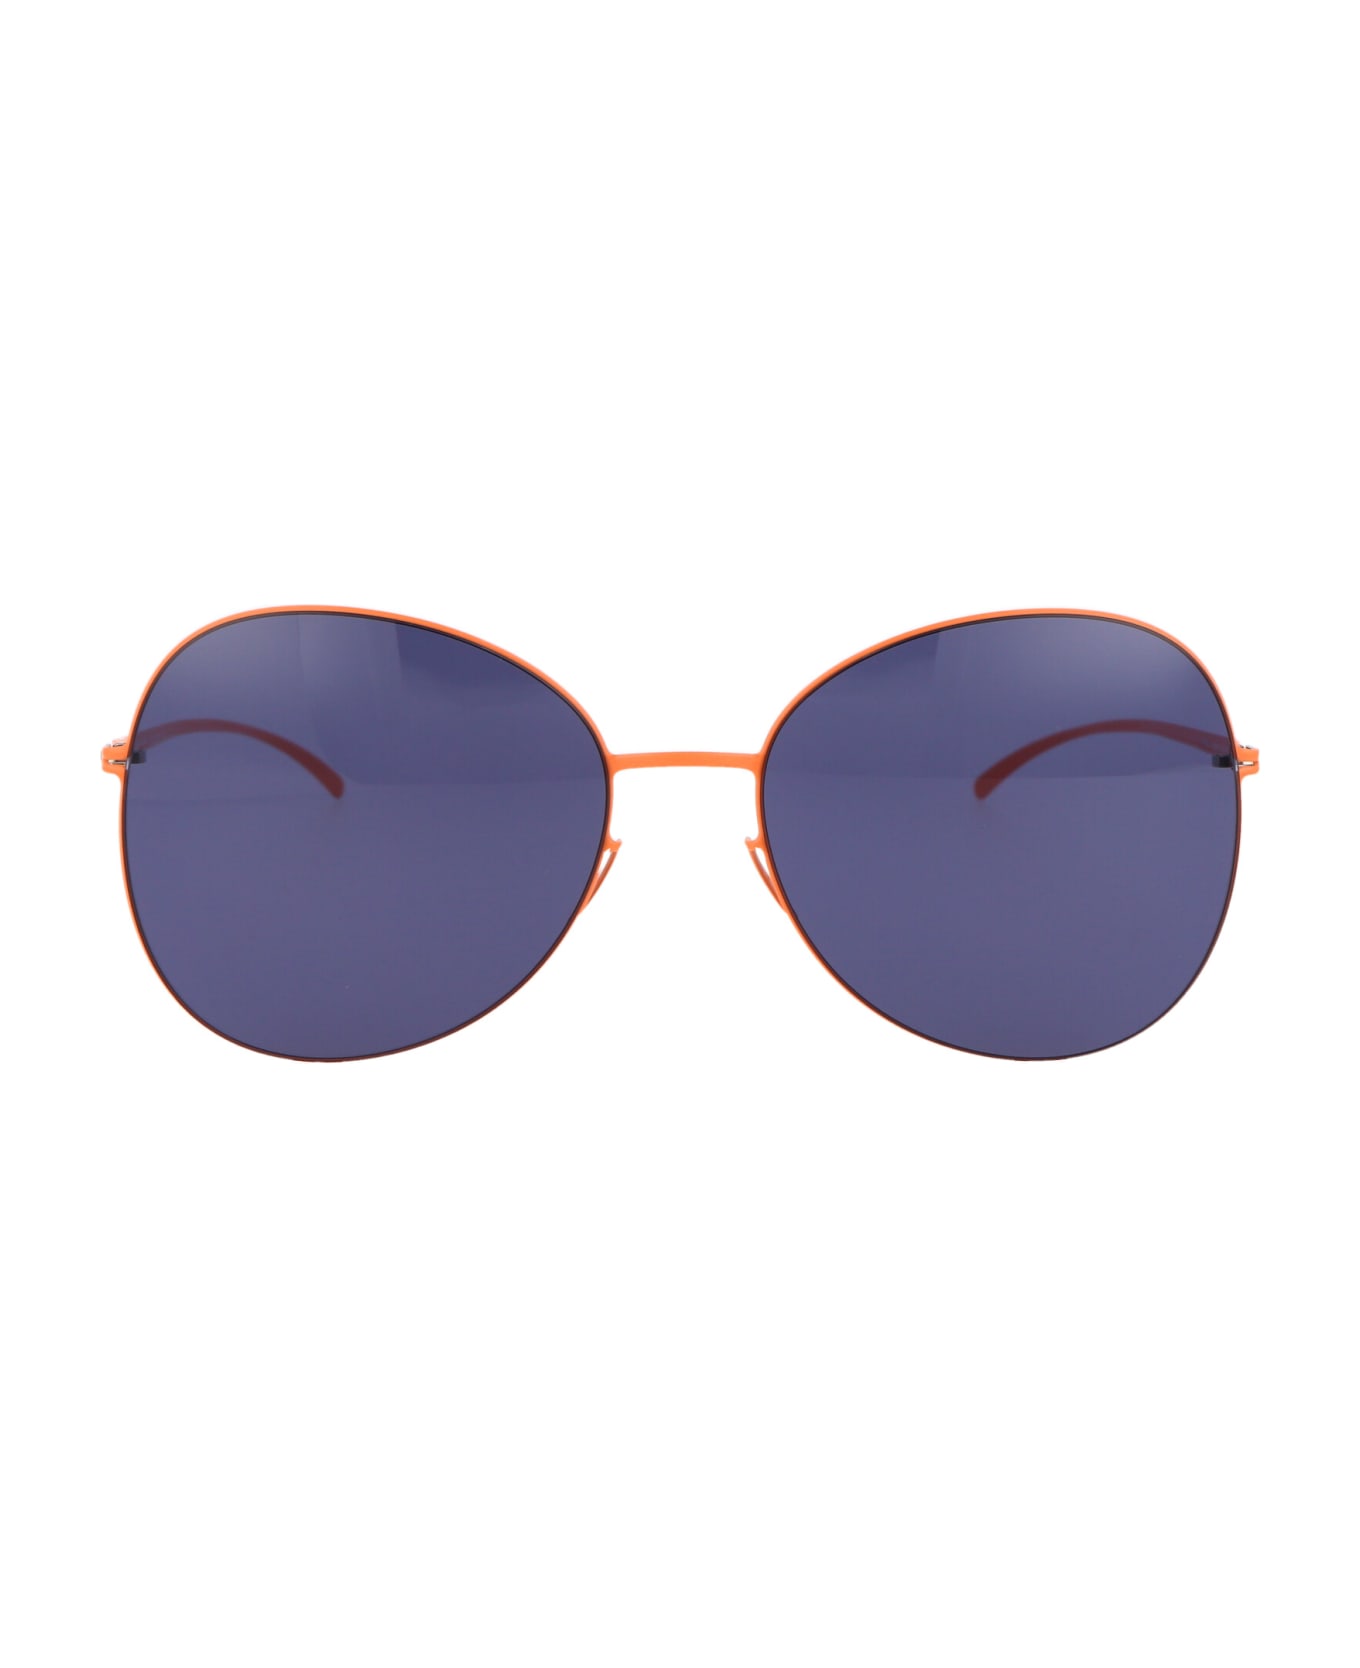 Mykita Mmesse025 Sunglasses - 443 E19 Apricot Indigo Solid